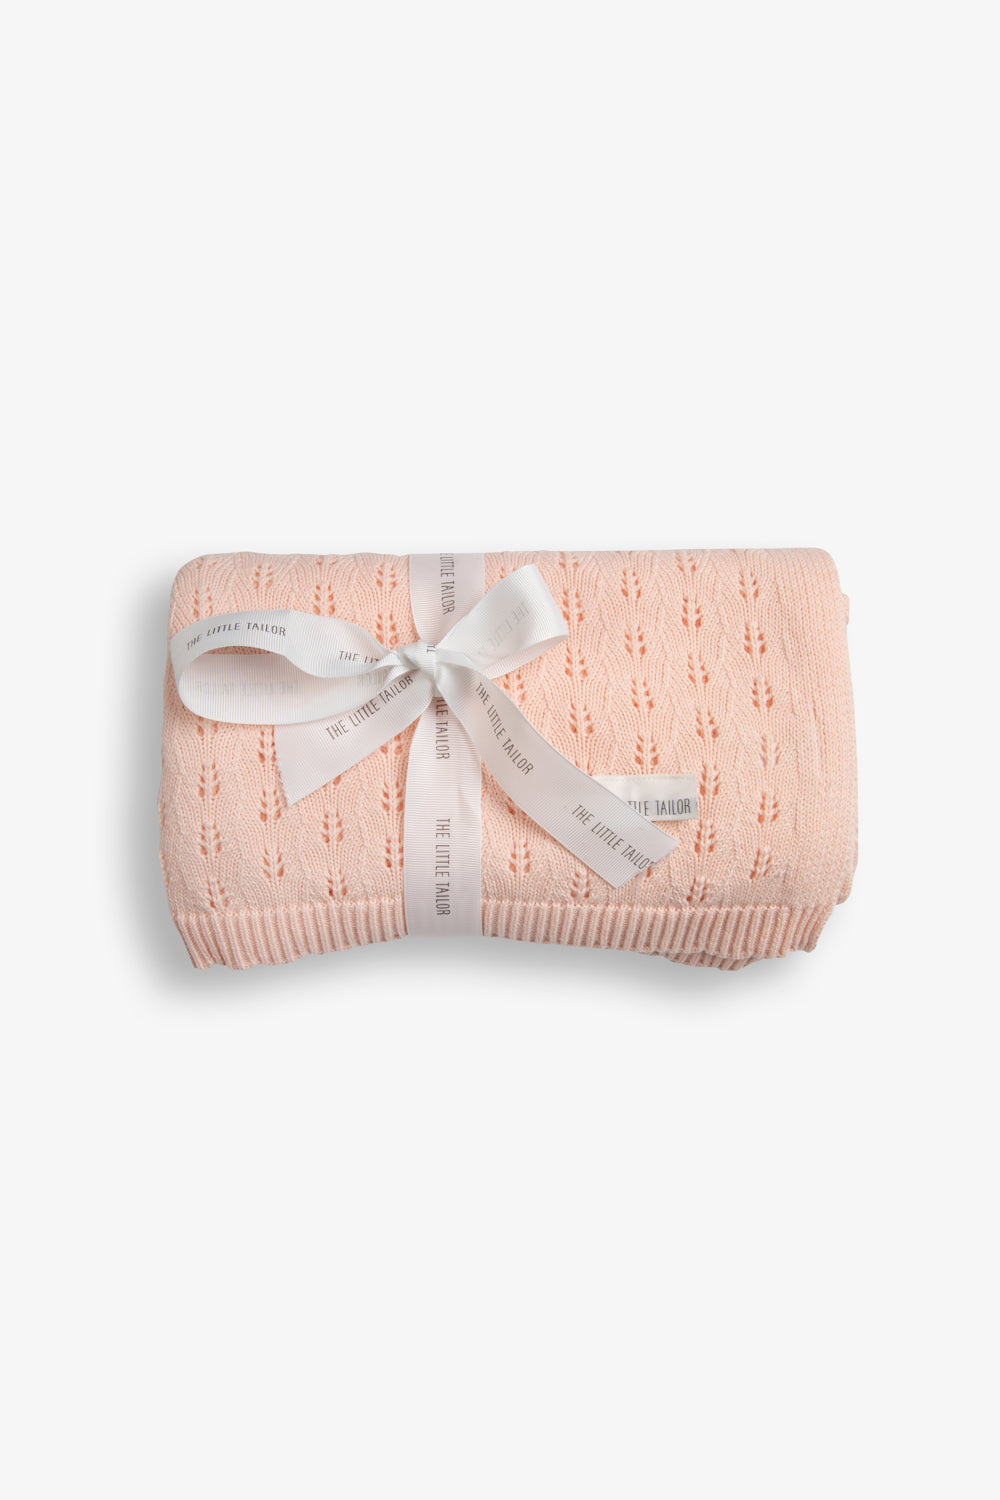 Pointelle Blanket - Pink (PK)